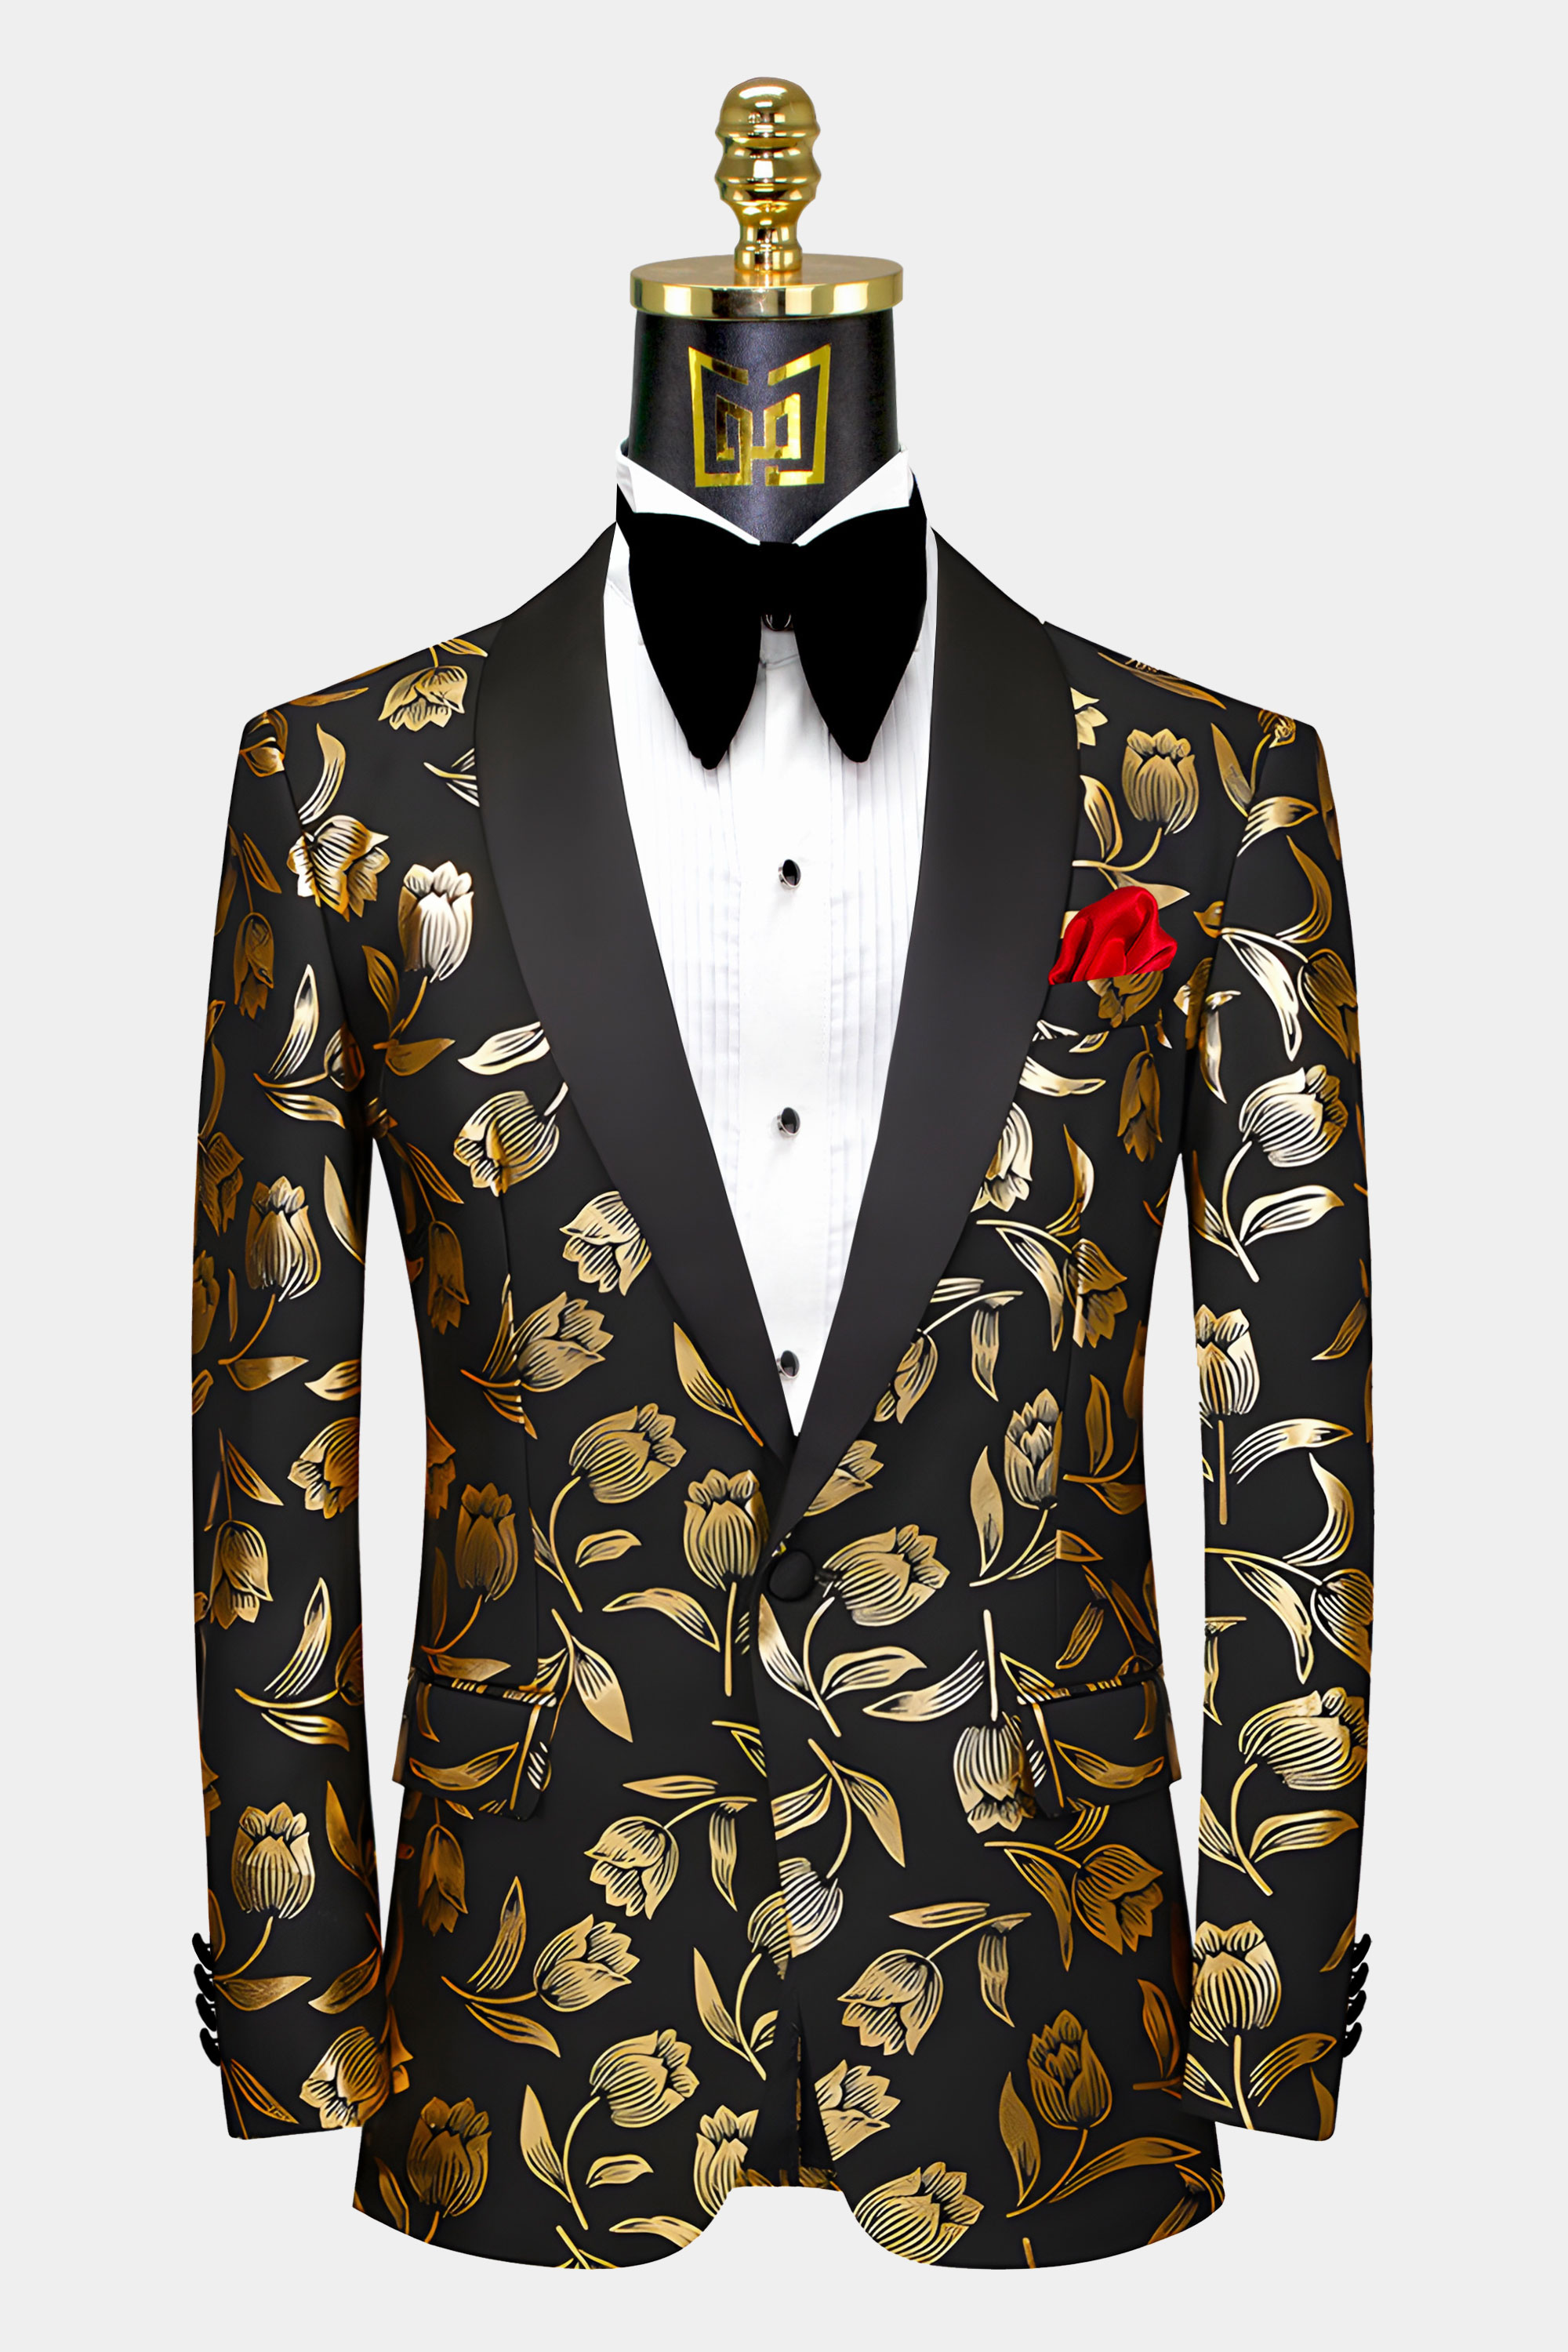 Mens-Black-and-Gold-Tuxedo-Jacket-Wedding-Groom-Prom-Blazer-For-Guys-from-Gentlemansguru.com